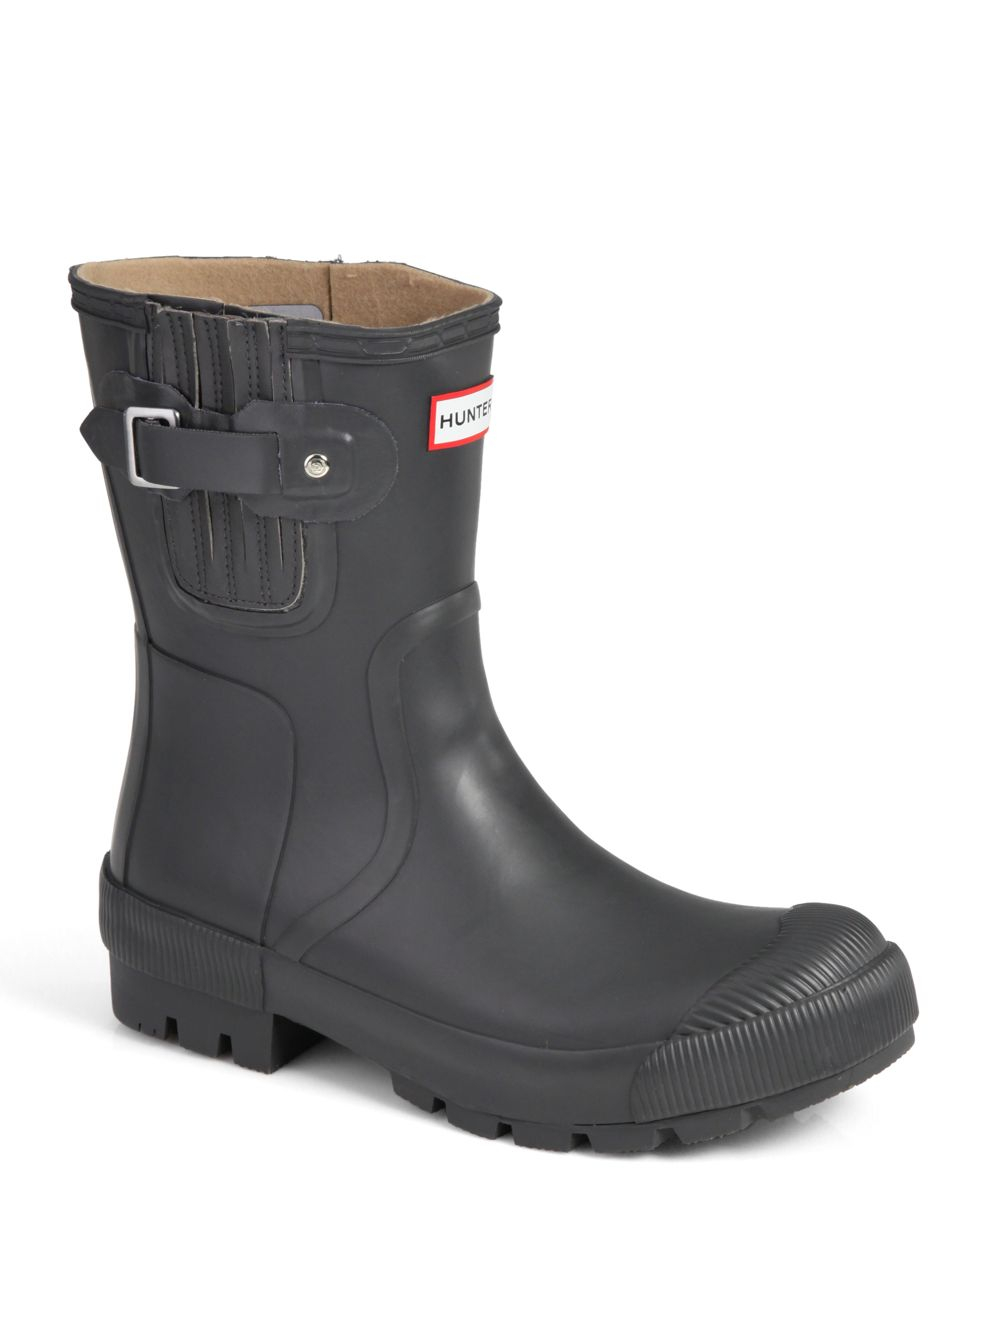 HUNTER Bennie Short Boots in Slate (Black) for Men - Lyst